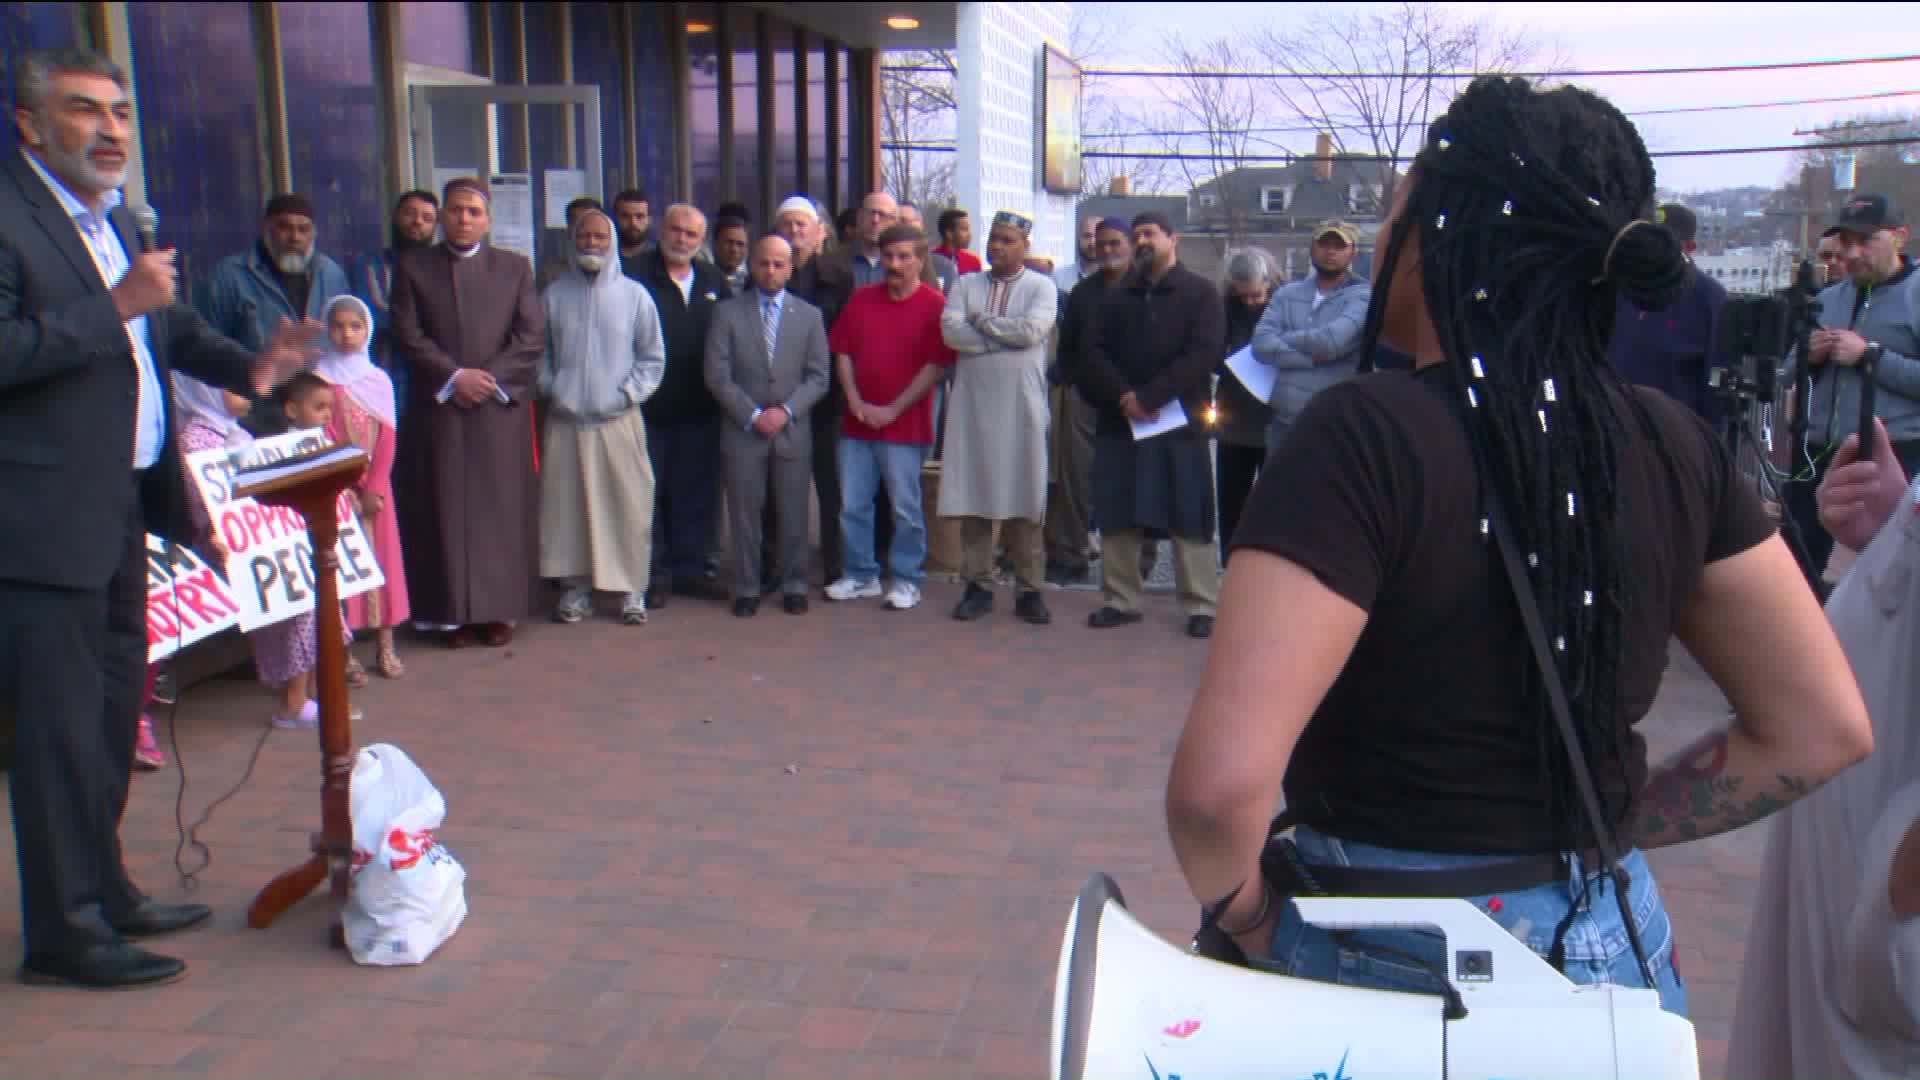 Waterbury community gathers to fight against islamophobia